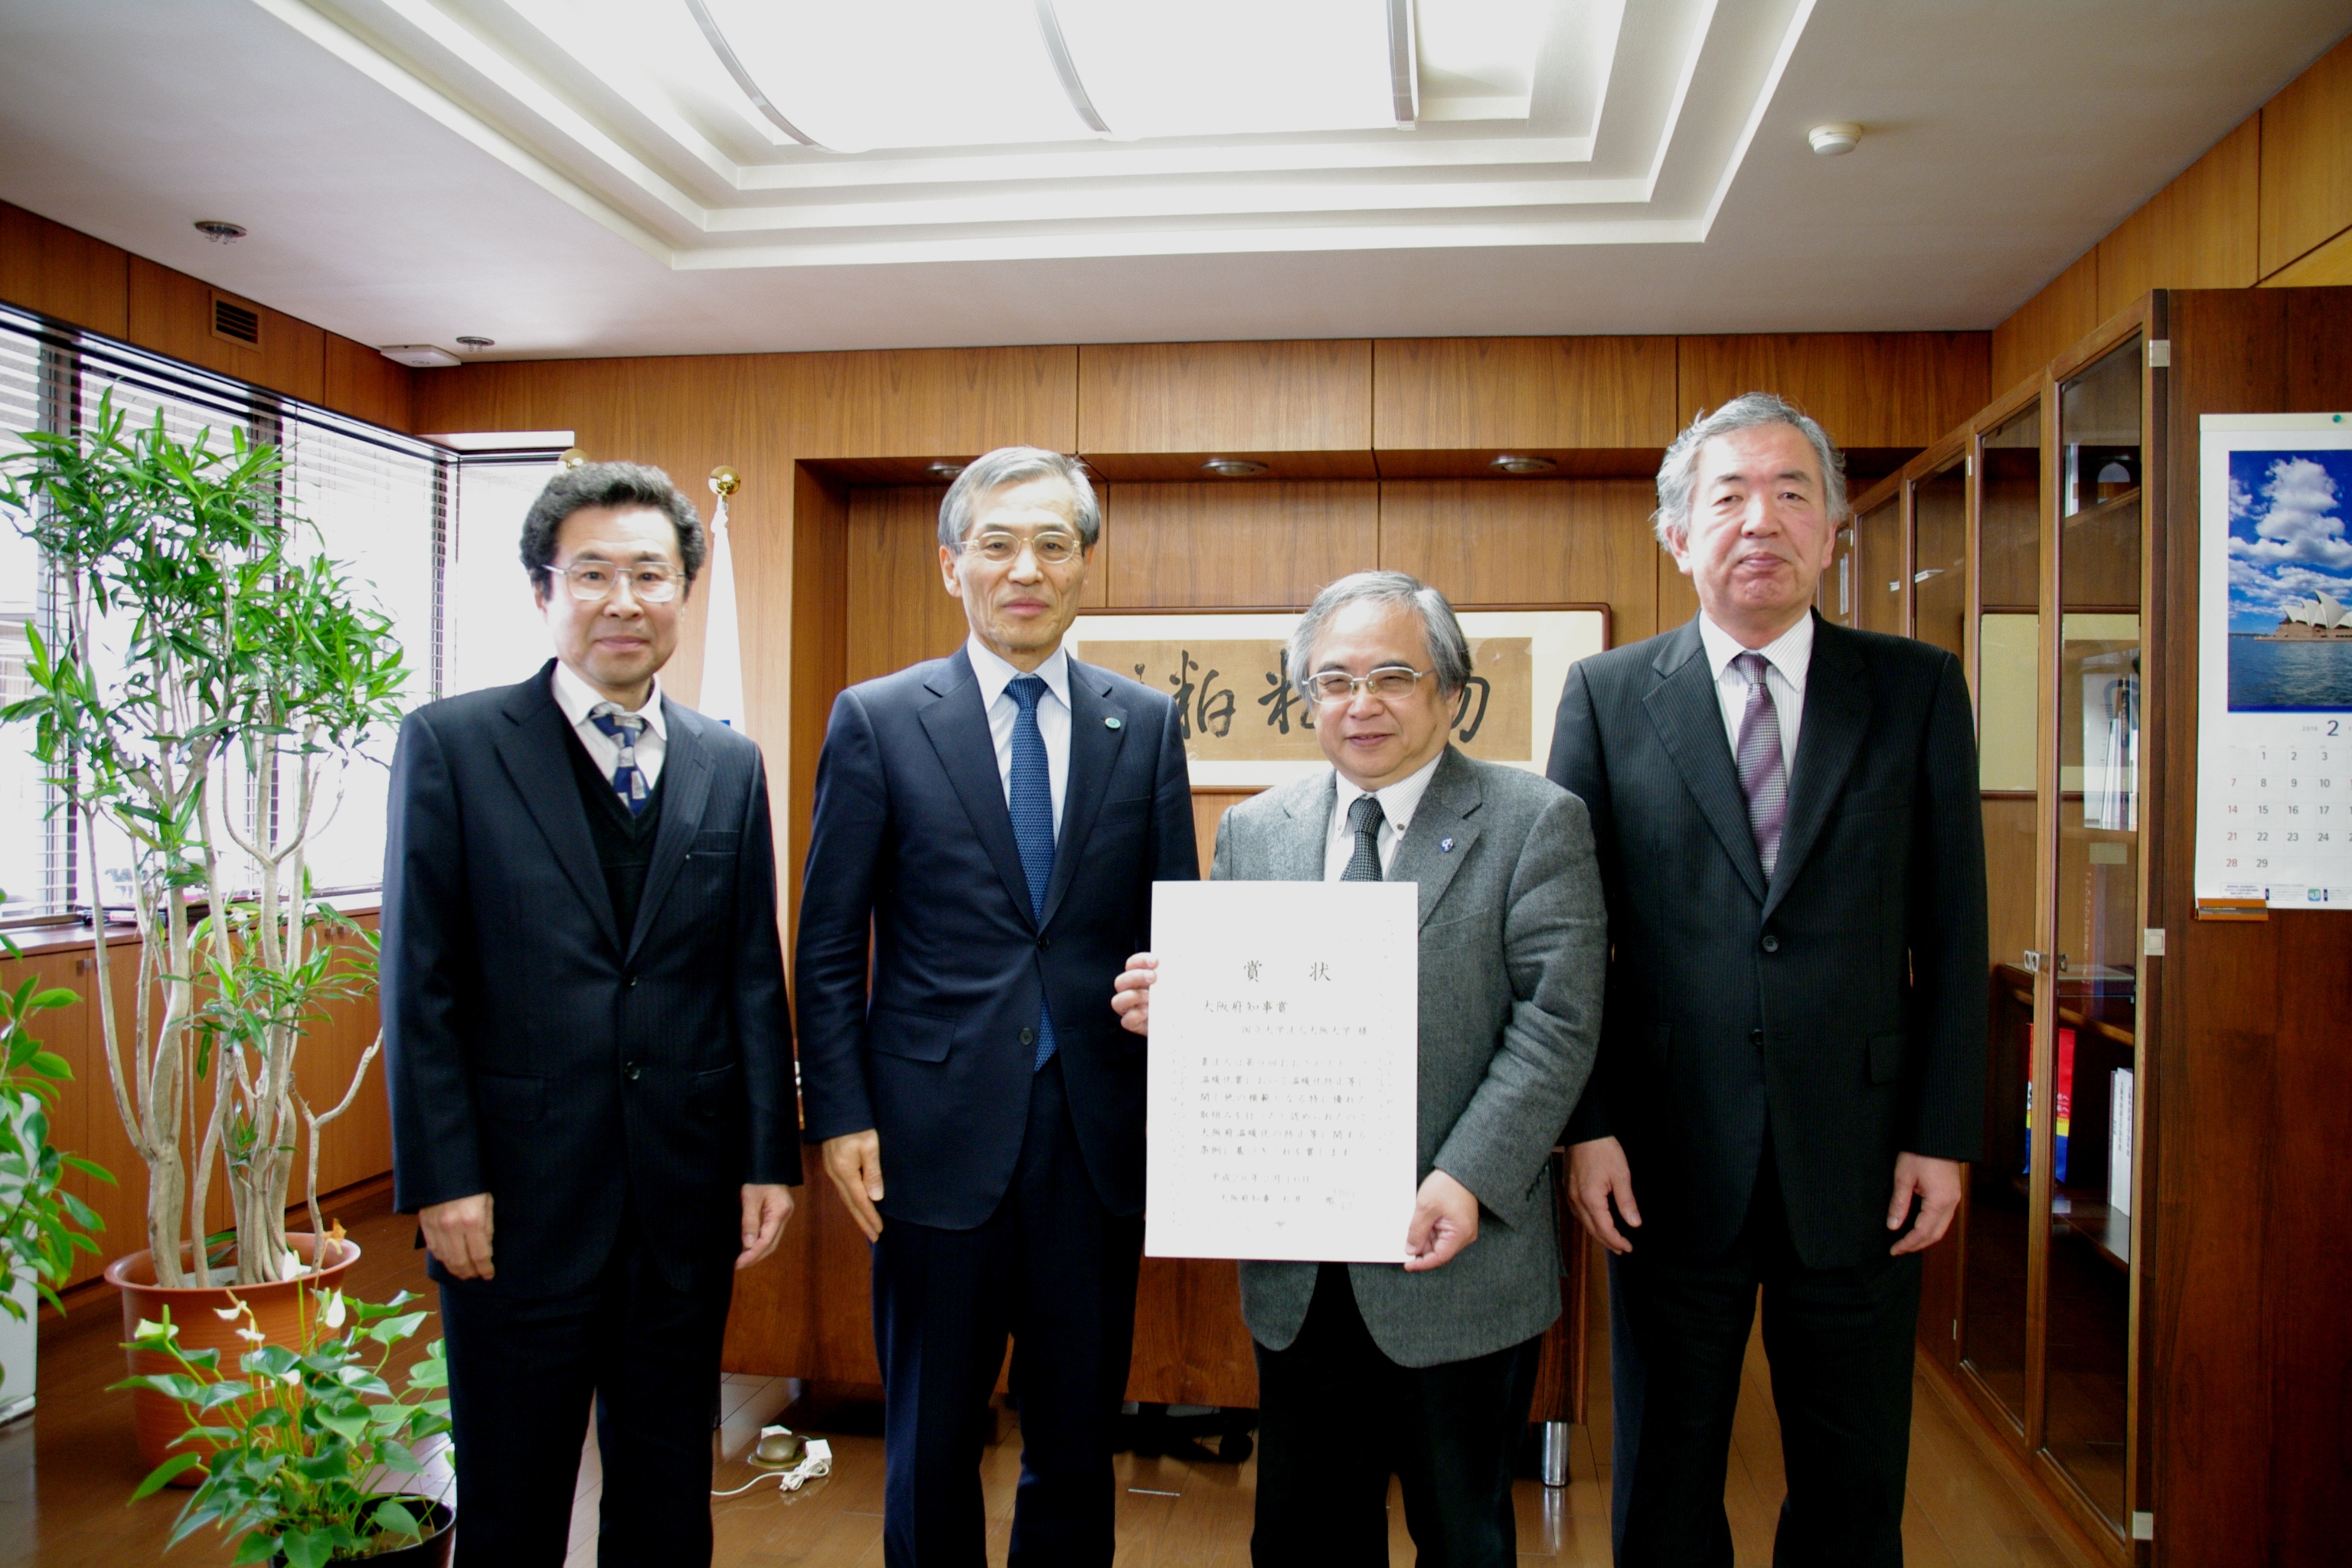 Osaka University Receives 2015-16 "Osaka Governor's Award" at the Stop! Global Warming Awards